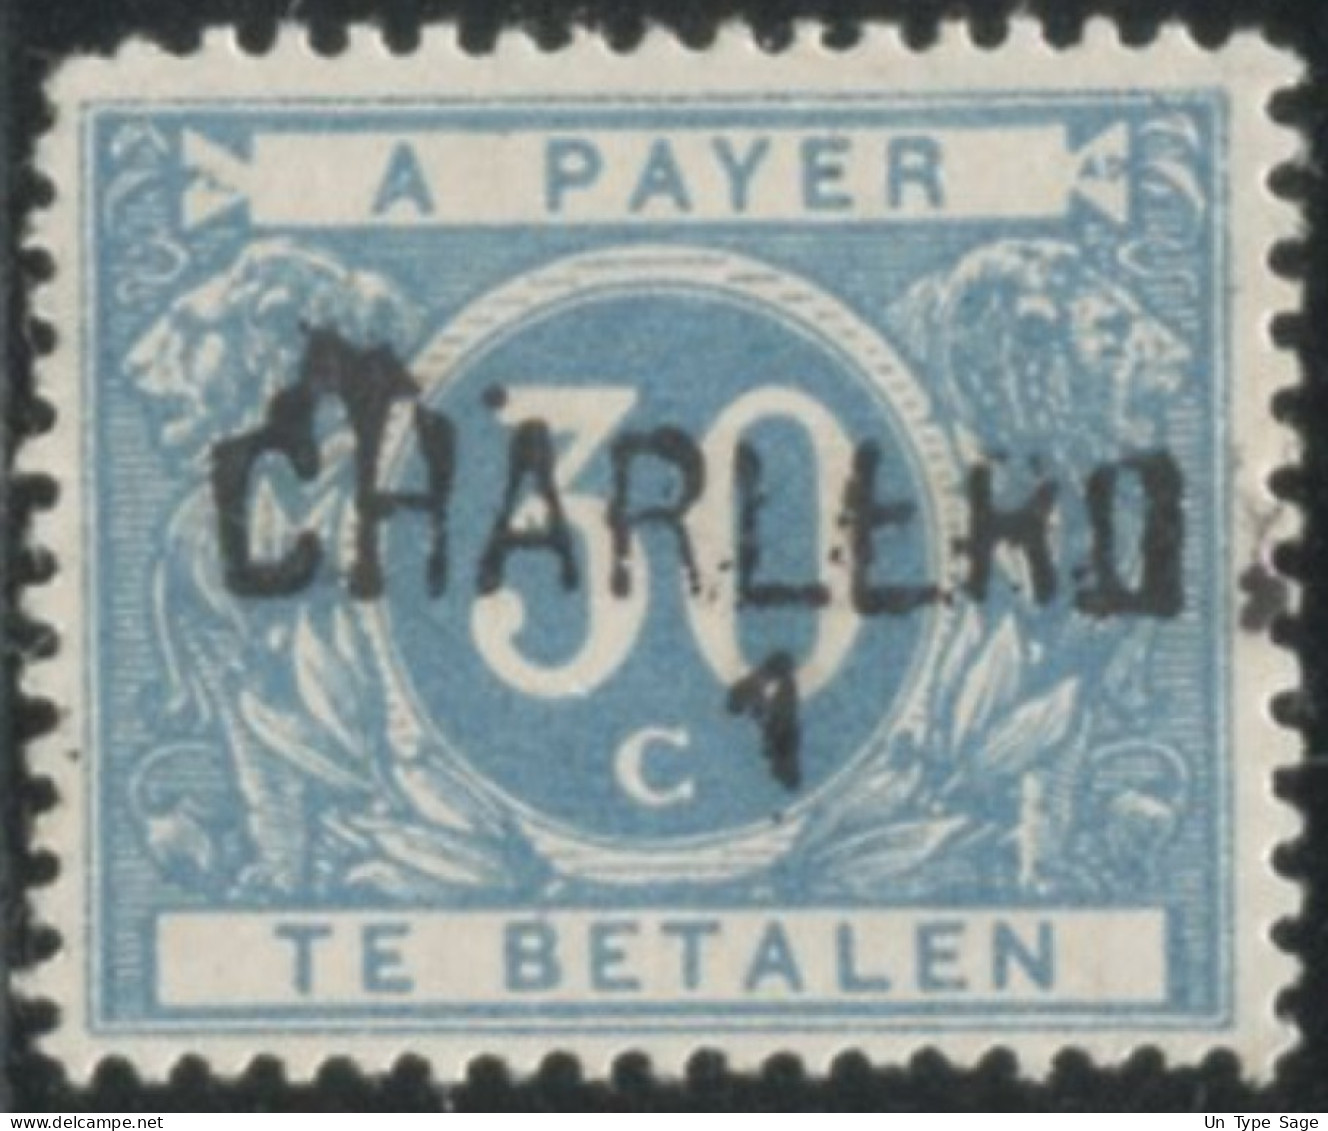 Belgique Timbre-taxe (TX) - Surcharge Locale De Distributeur - CHARLEROY 1 - (F996) - Stamps